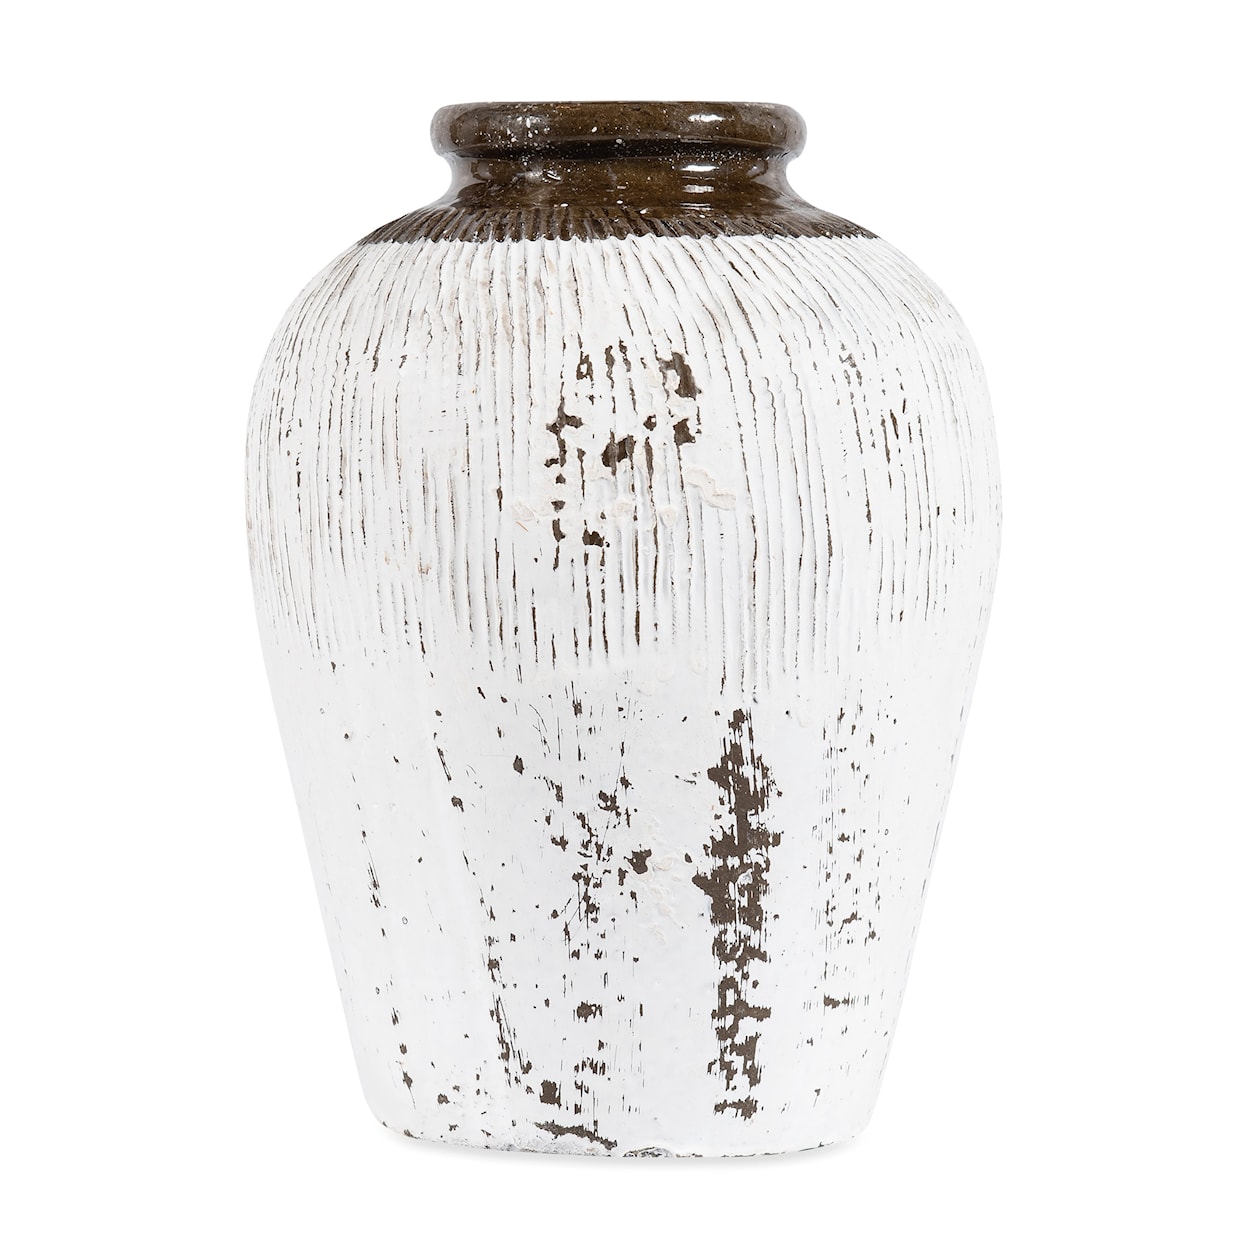 BOBO Intriguing Objects BOBO Intriguing Objects Antique Rice Wine Jar - Small